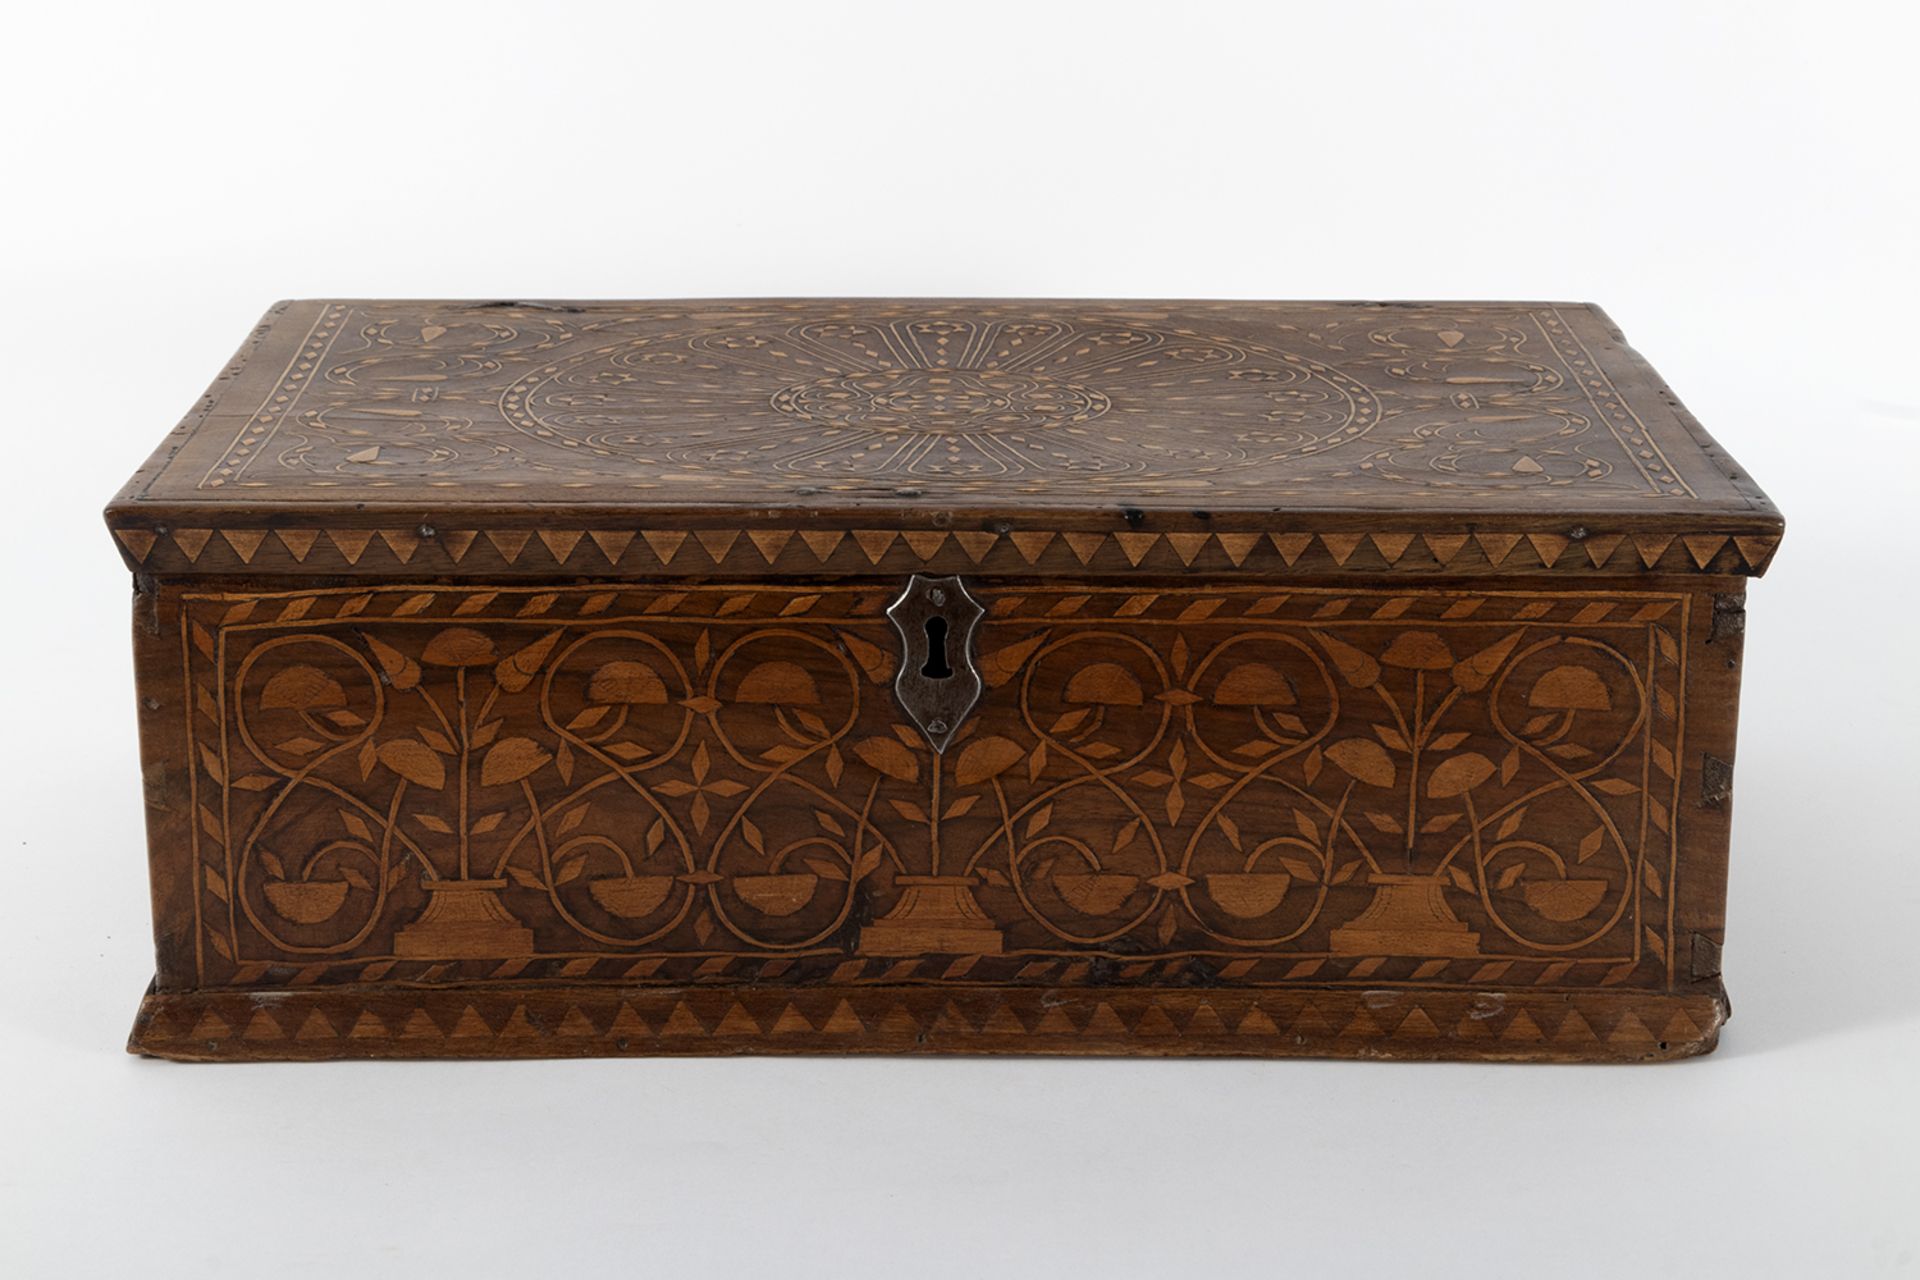 Walnut wood casket with boxwood inlay with geometric and plant motifs.